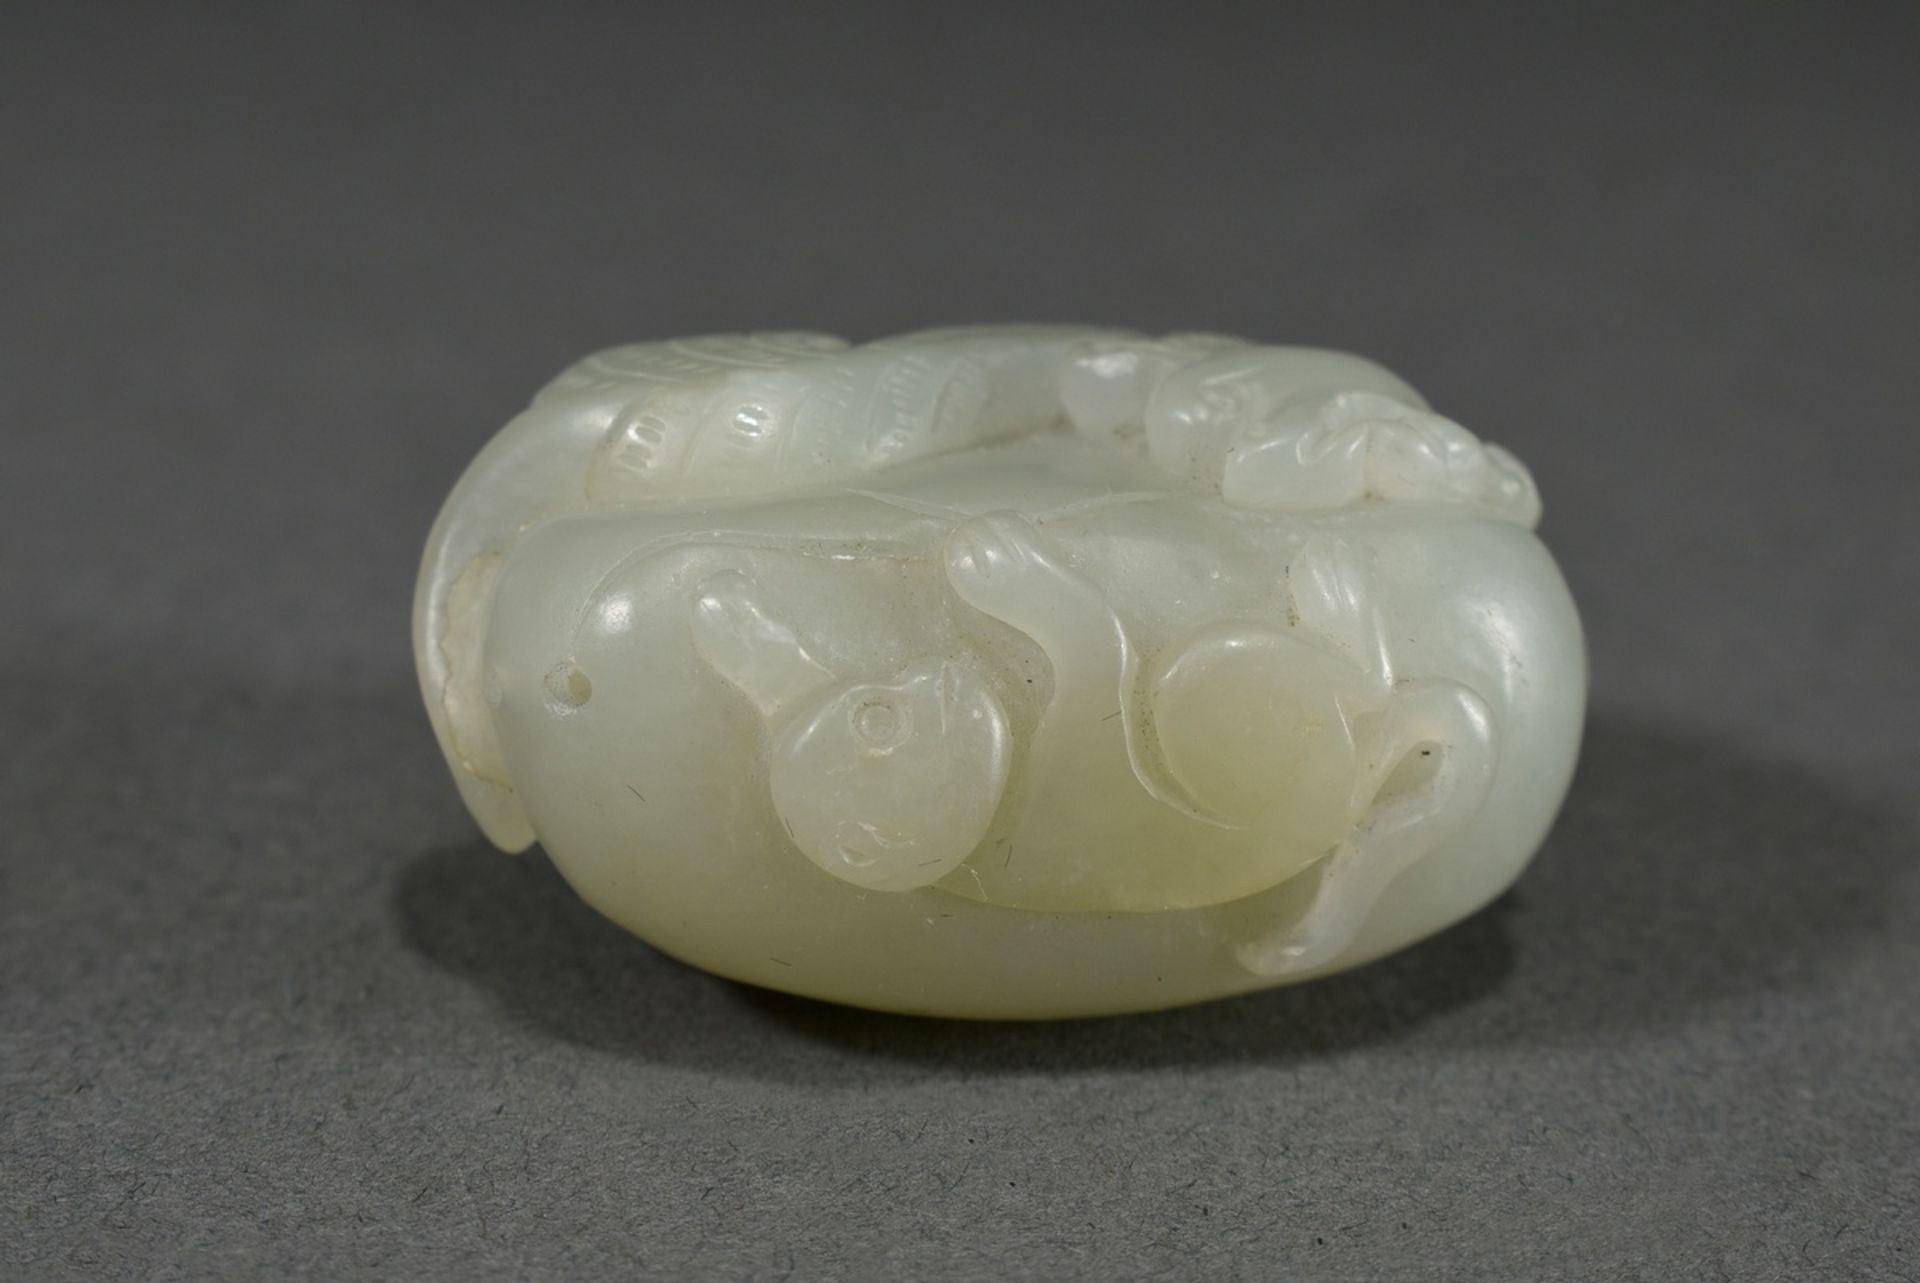 Fine celadon jade toggle "Tiger and monkey on rocks", China, 3.7x2.5x1.9cm - Image 3 of 4